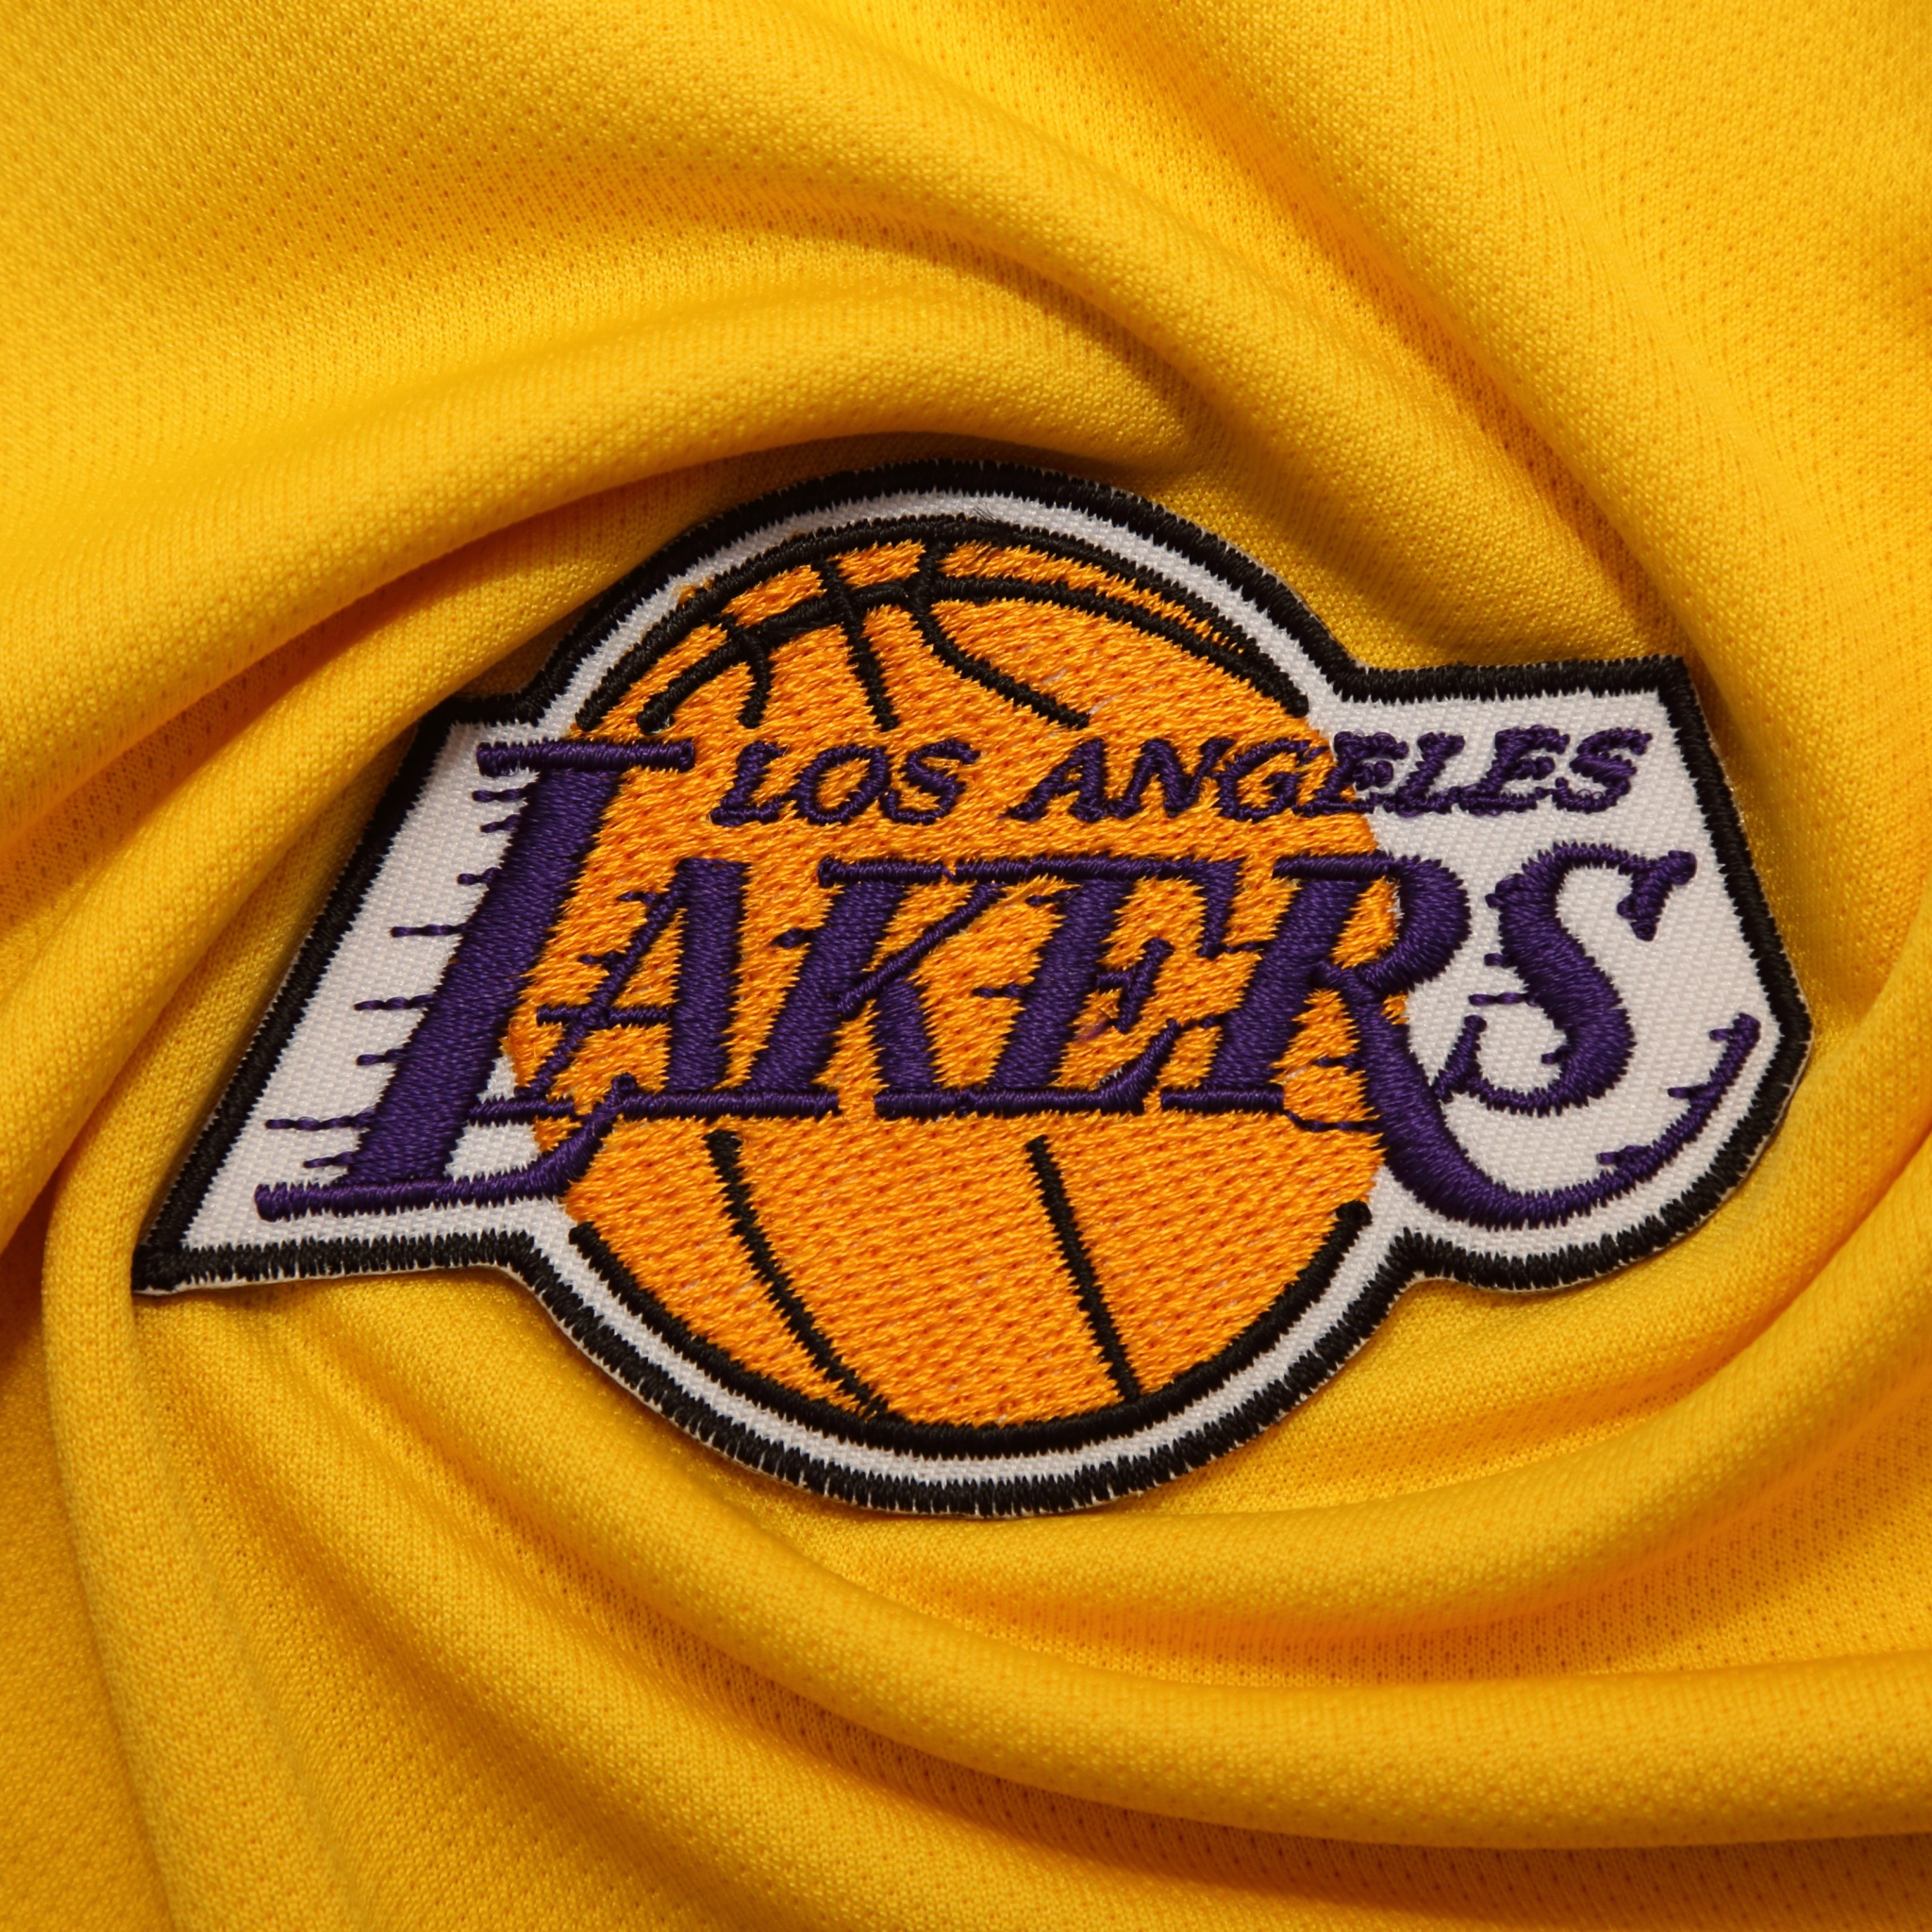 Los Angeles Lakers Wallpapers  Basketball Wallpapers at